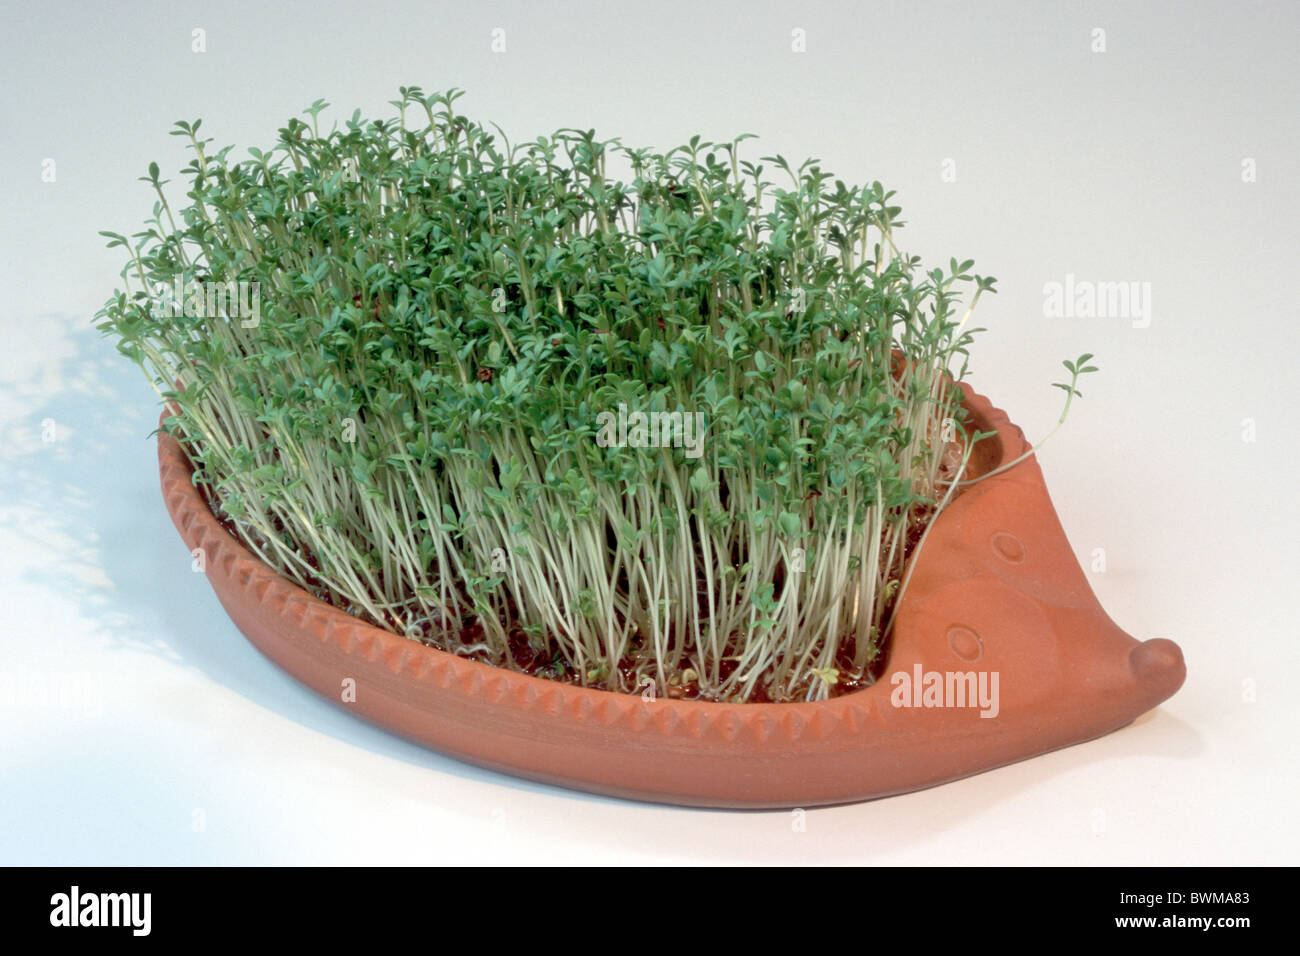 Gartenkresse, Feldkresse (Lepidium Sativum), in einem Igel keimenden Schüssel, Studio Bild geformt. Stockfoto